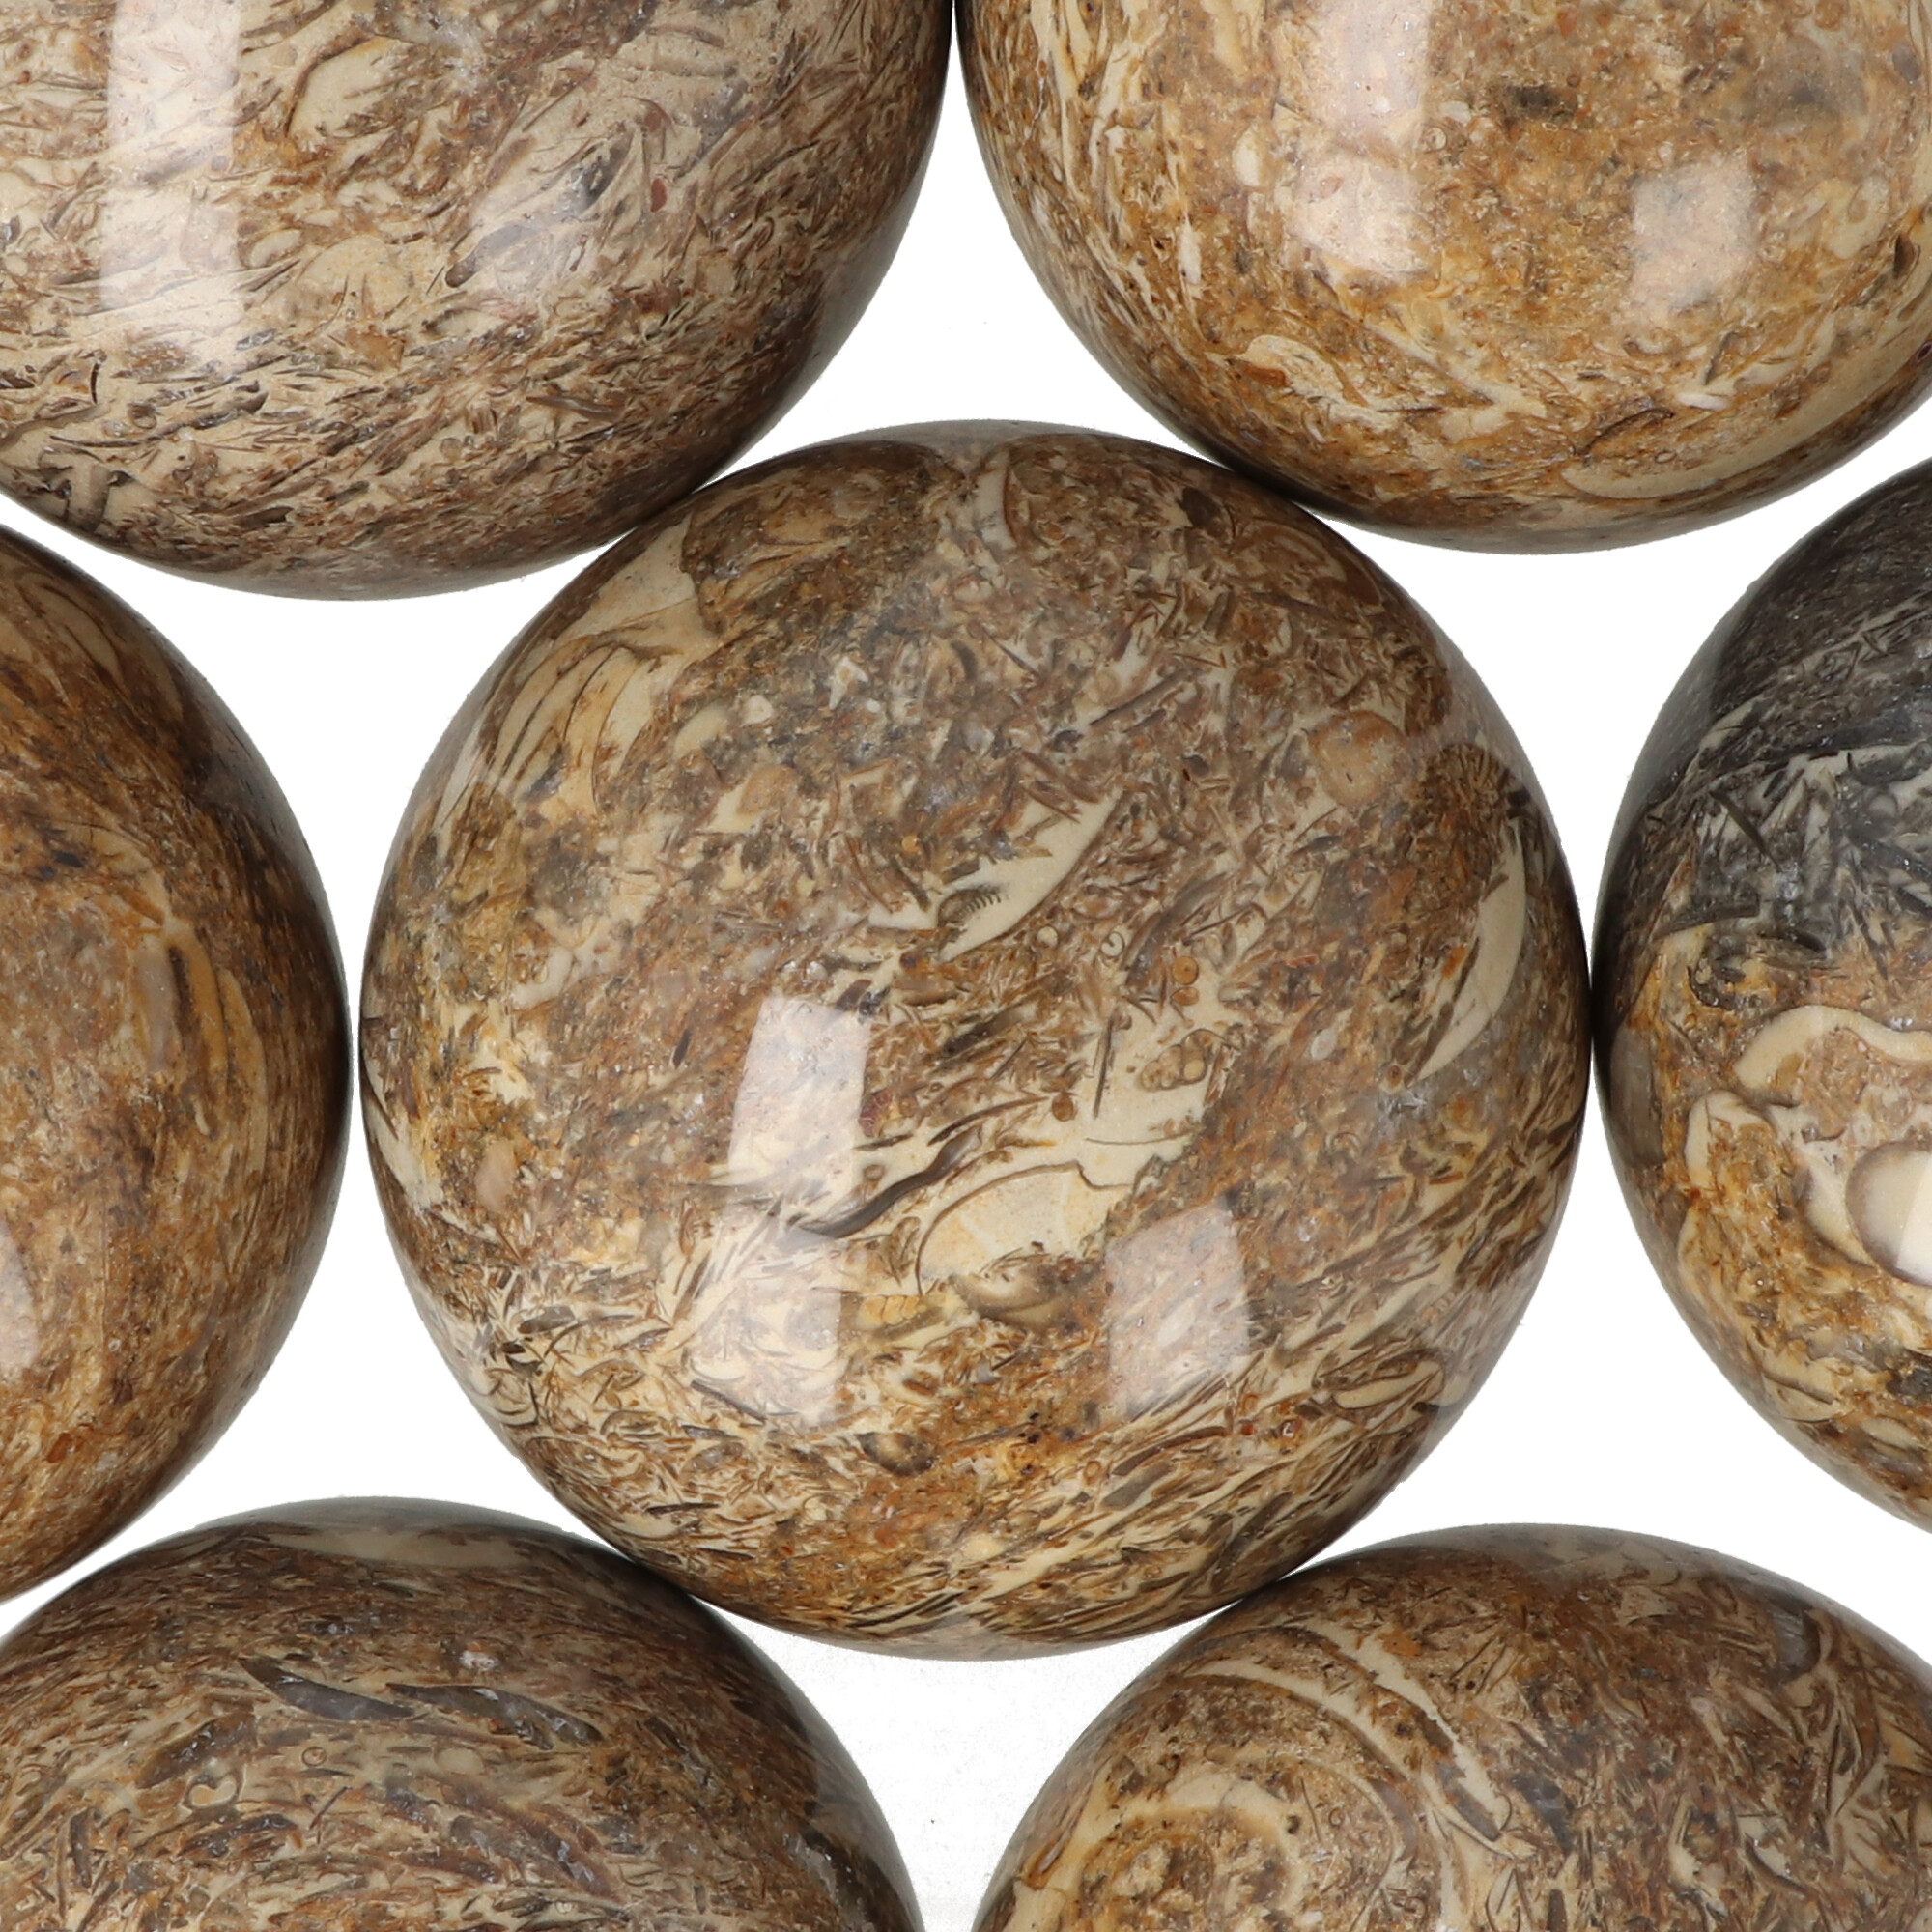 fossil-jaspis-balls-madagascar-zoom